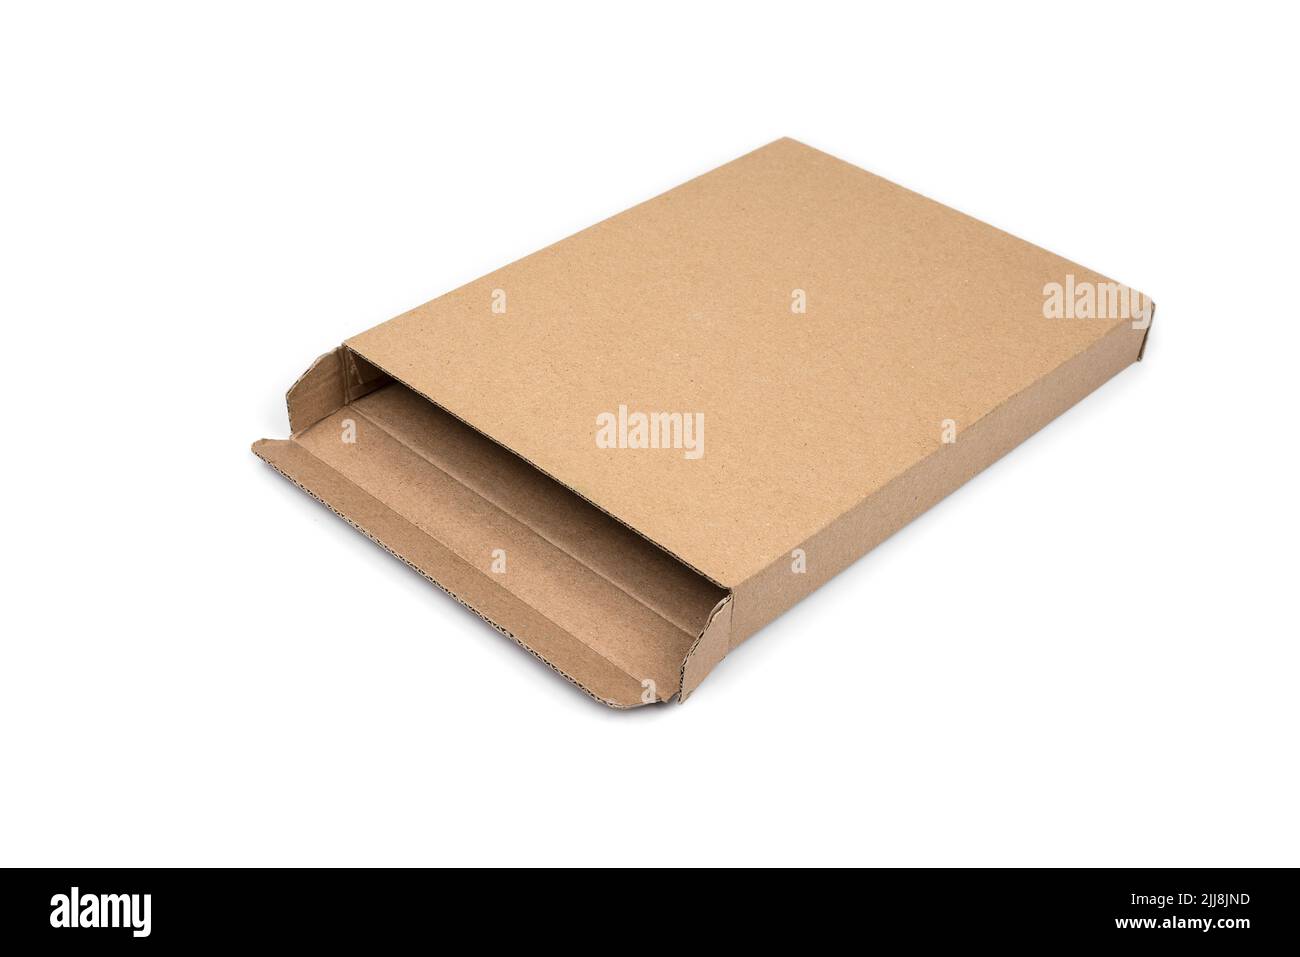 Very narrow cardboard box on a white Stock Photo